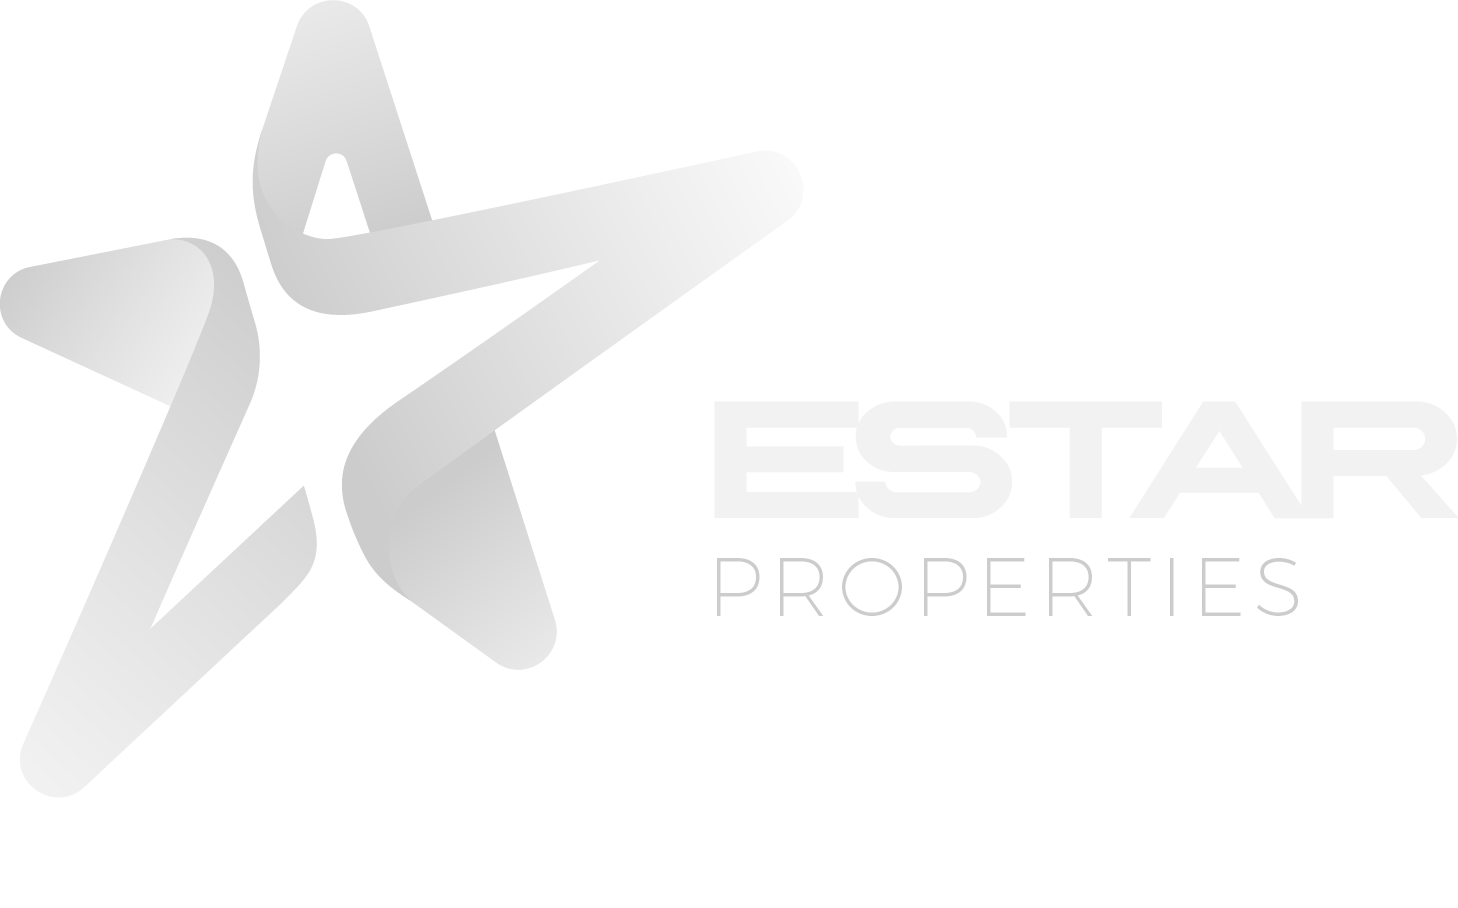 EStar Business Website